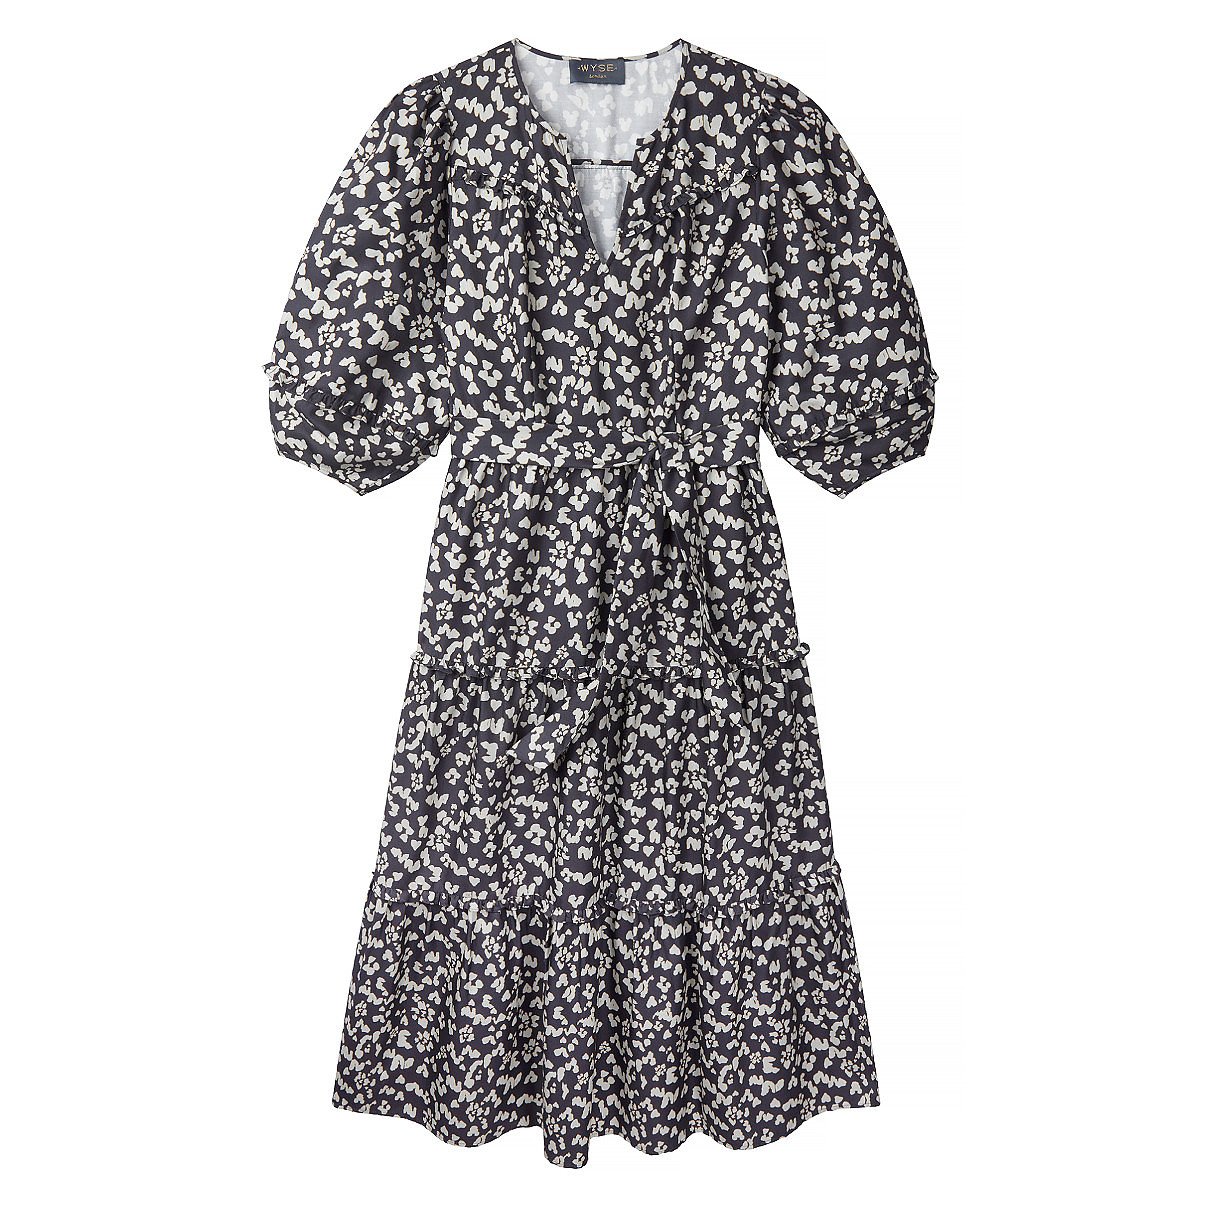 Wyse London Winter Nadine Ikat Leopard Dress